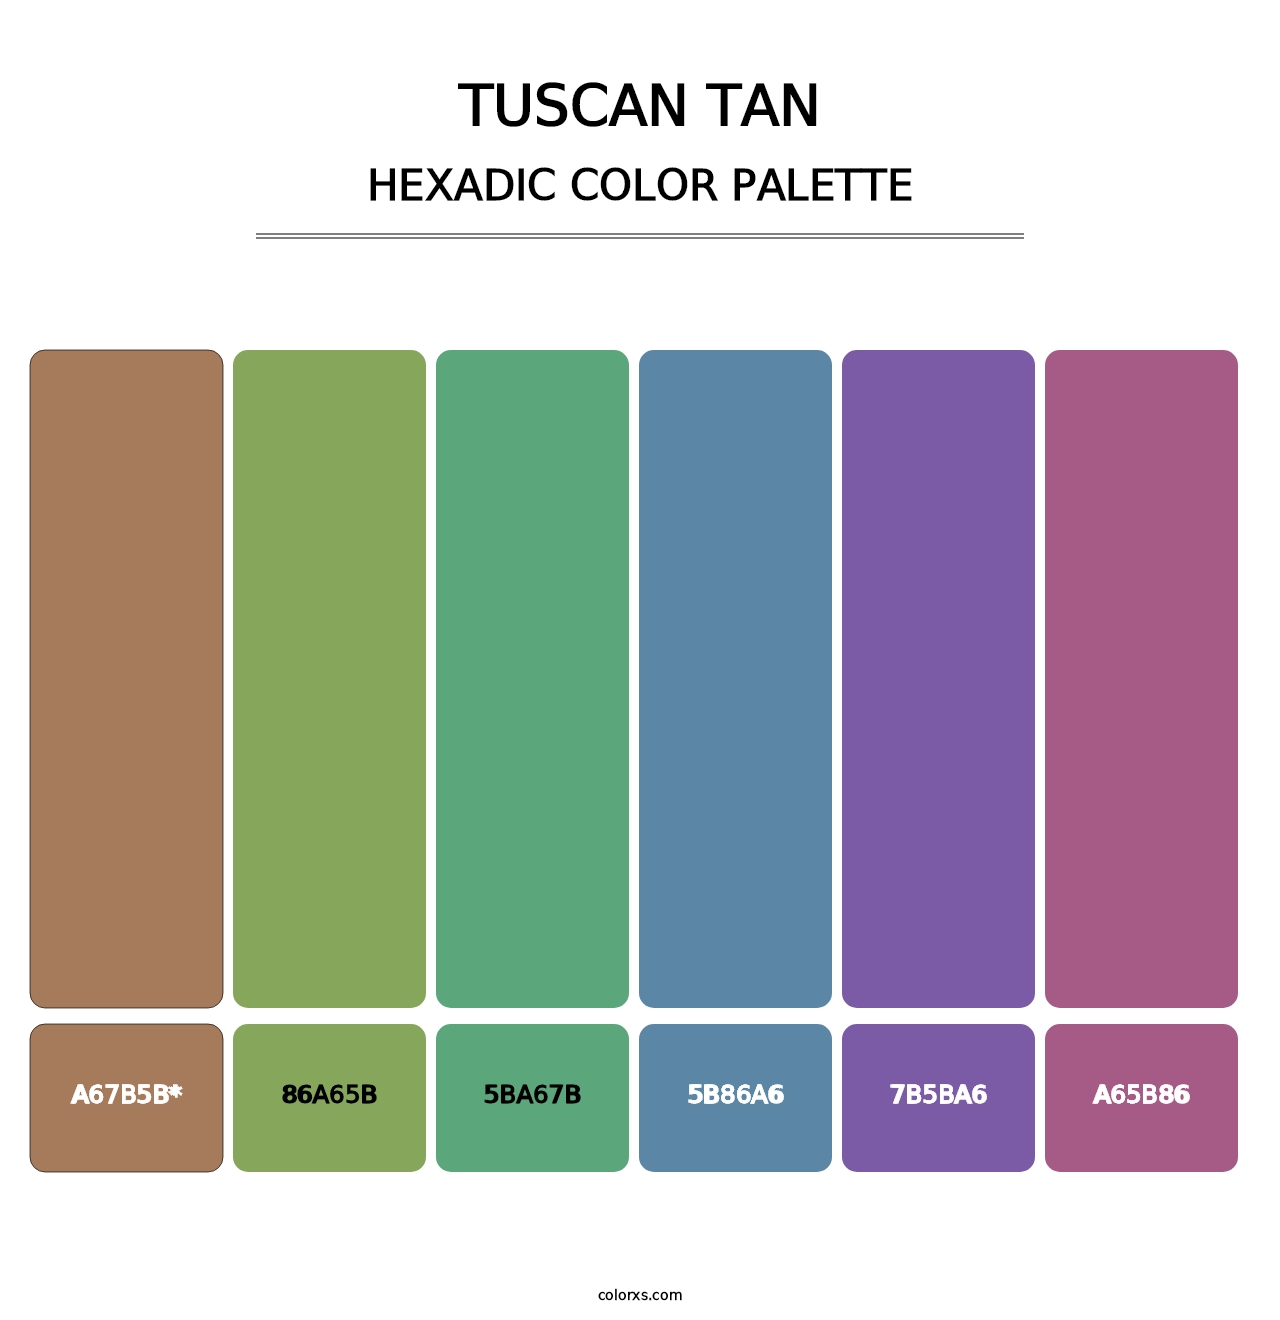 Tuscan Tan - Hexadic Color Palette